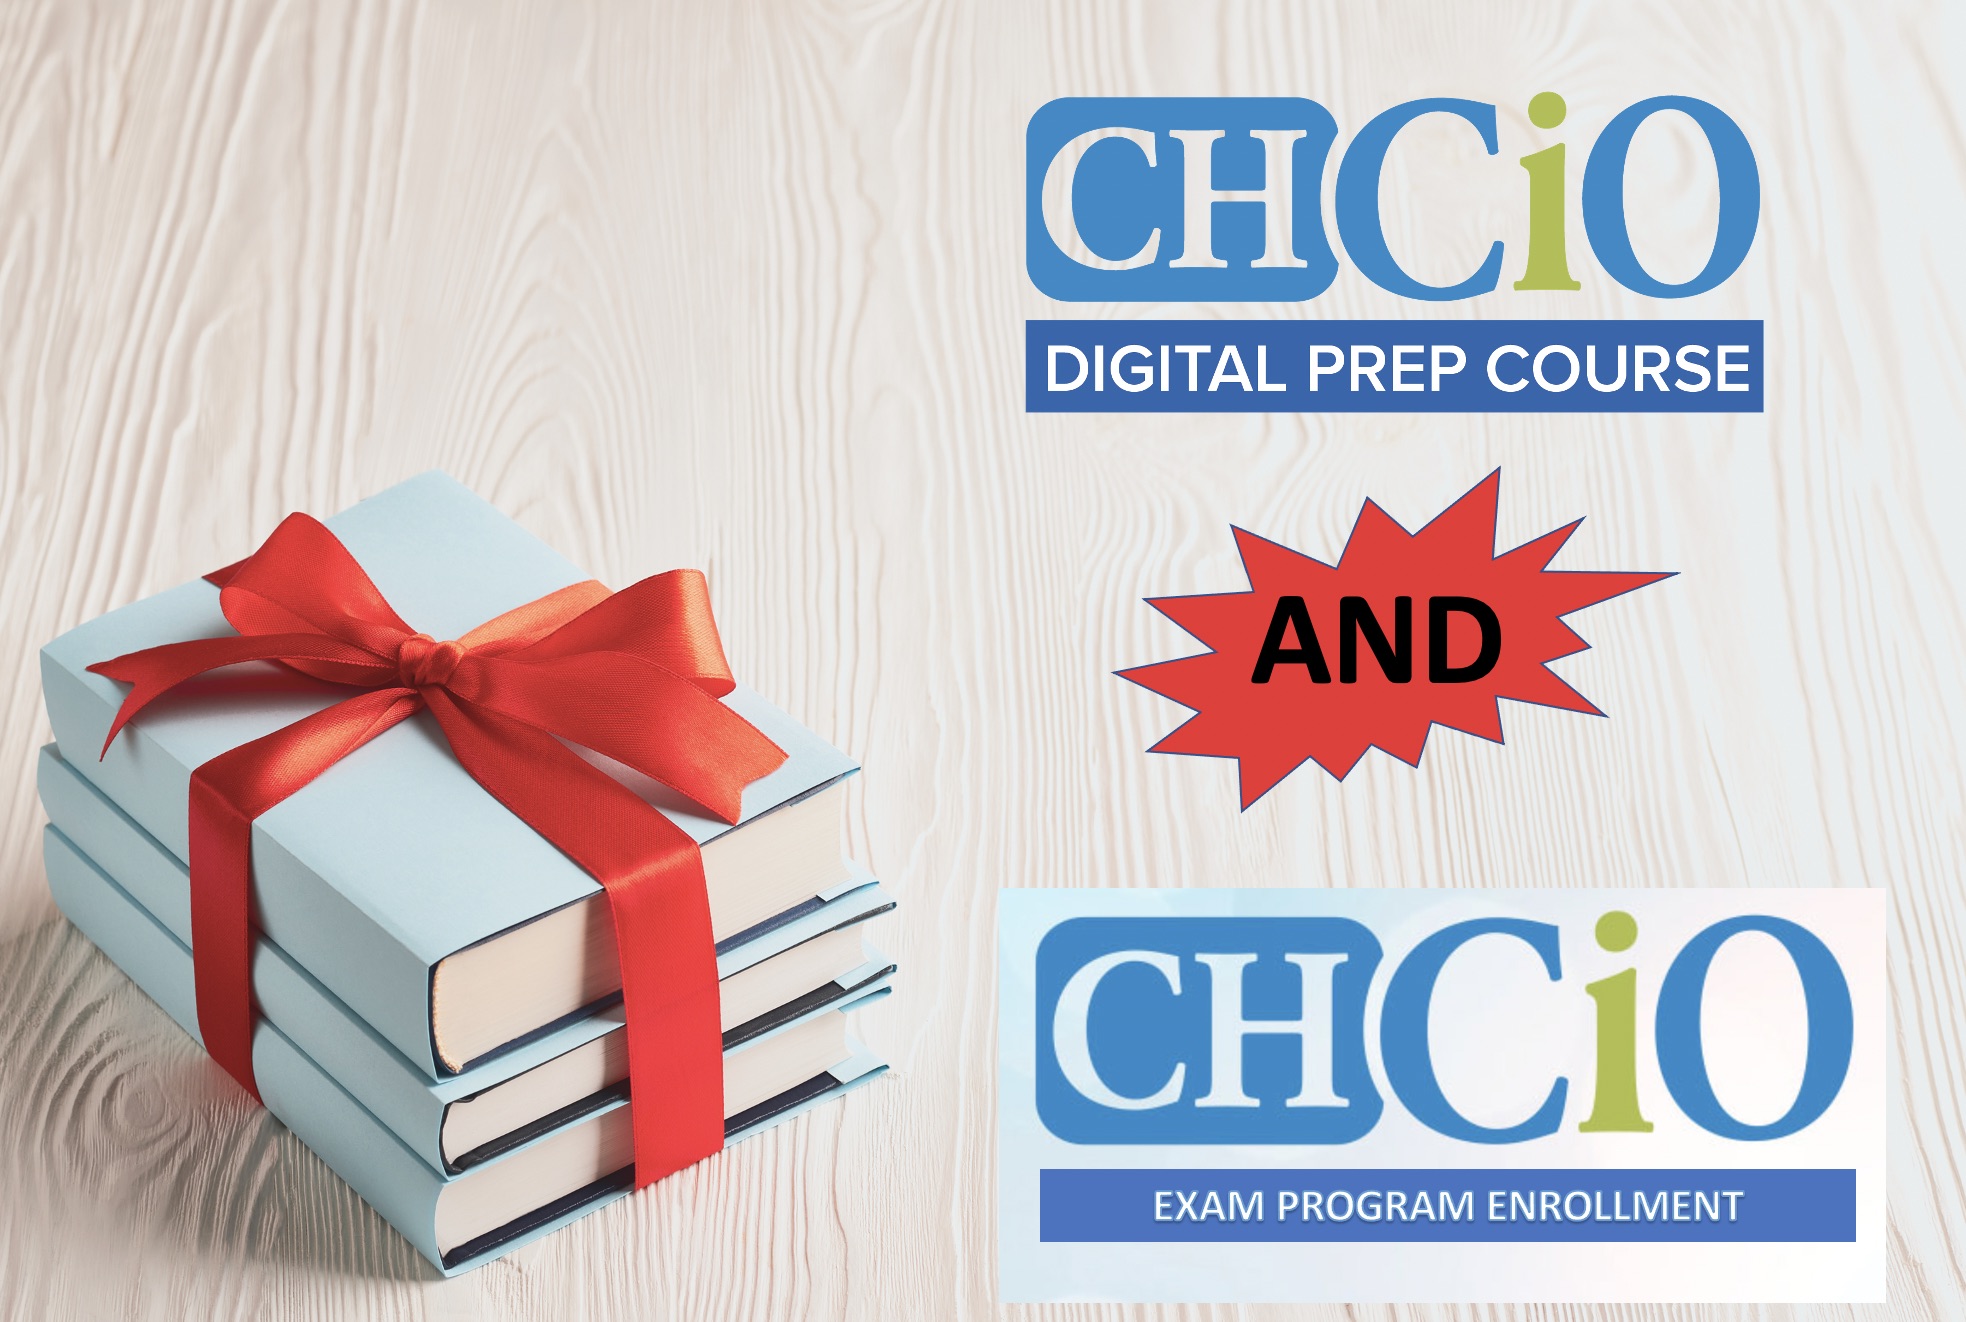 CHCIO Digital Prep Course AND CHCIO Program Enrollment